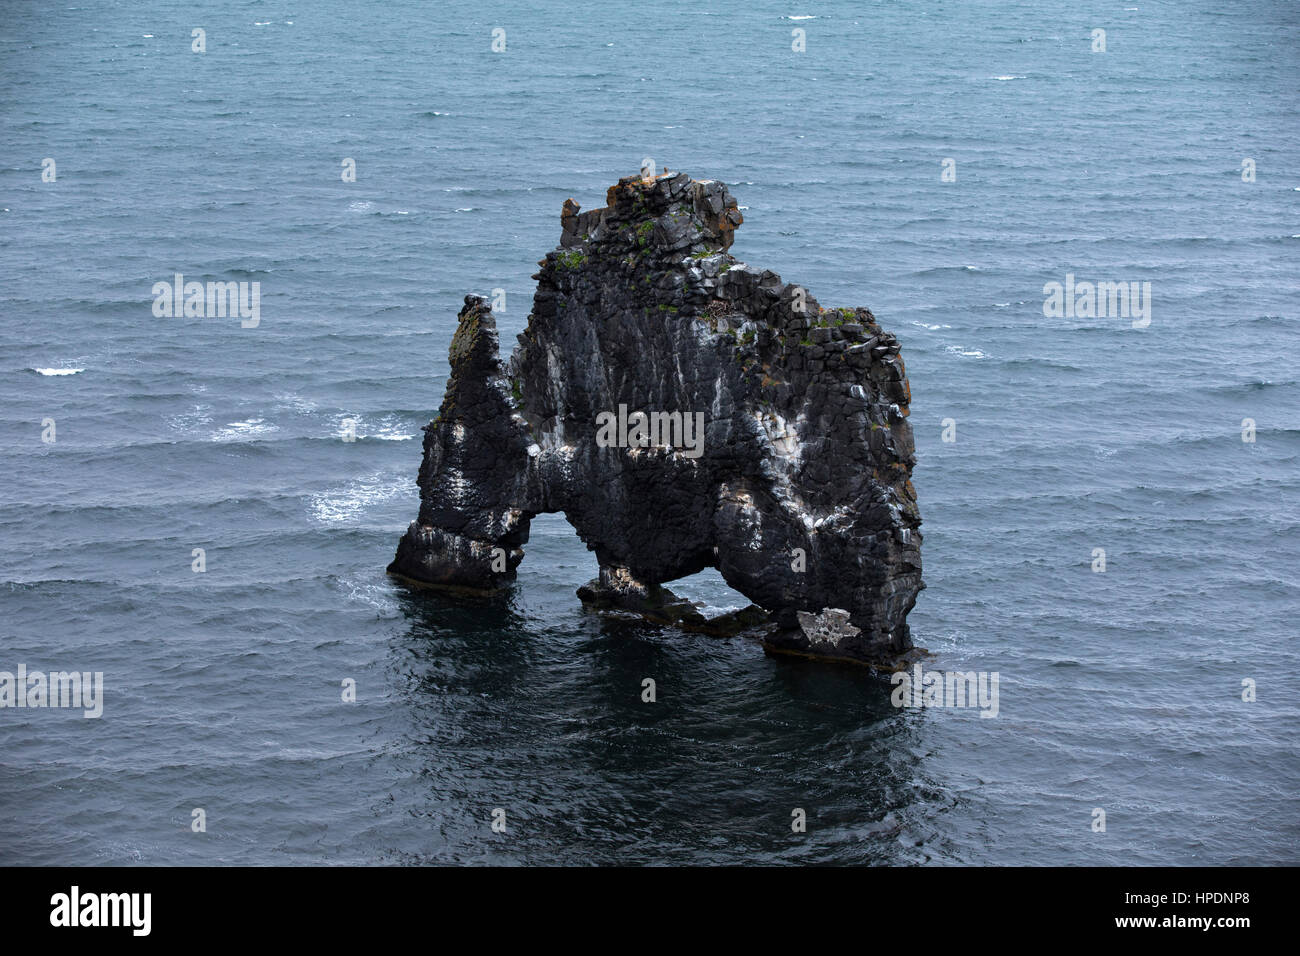 Dragon potable, roche exposée en Islande, littoral de l'océan Atlantique. Banque D'Images